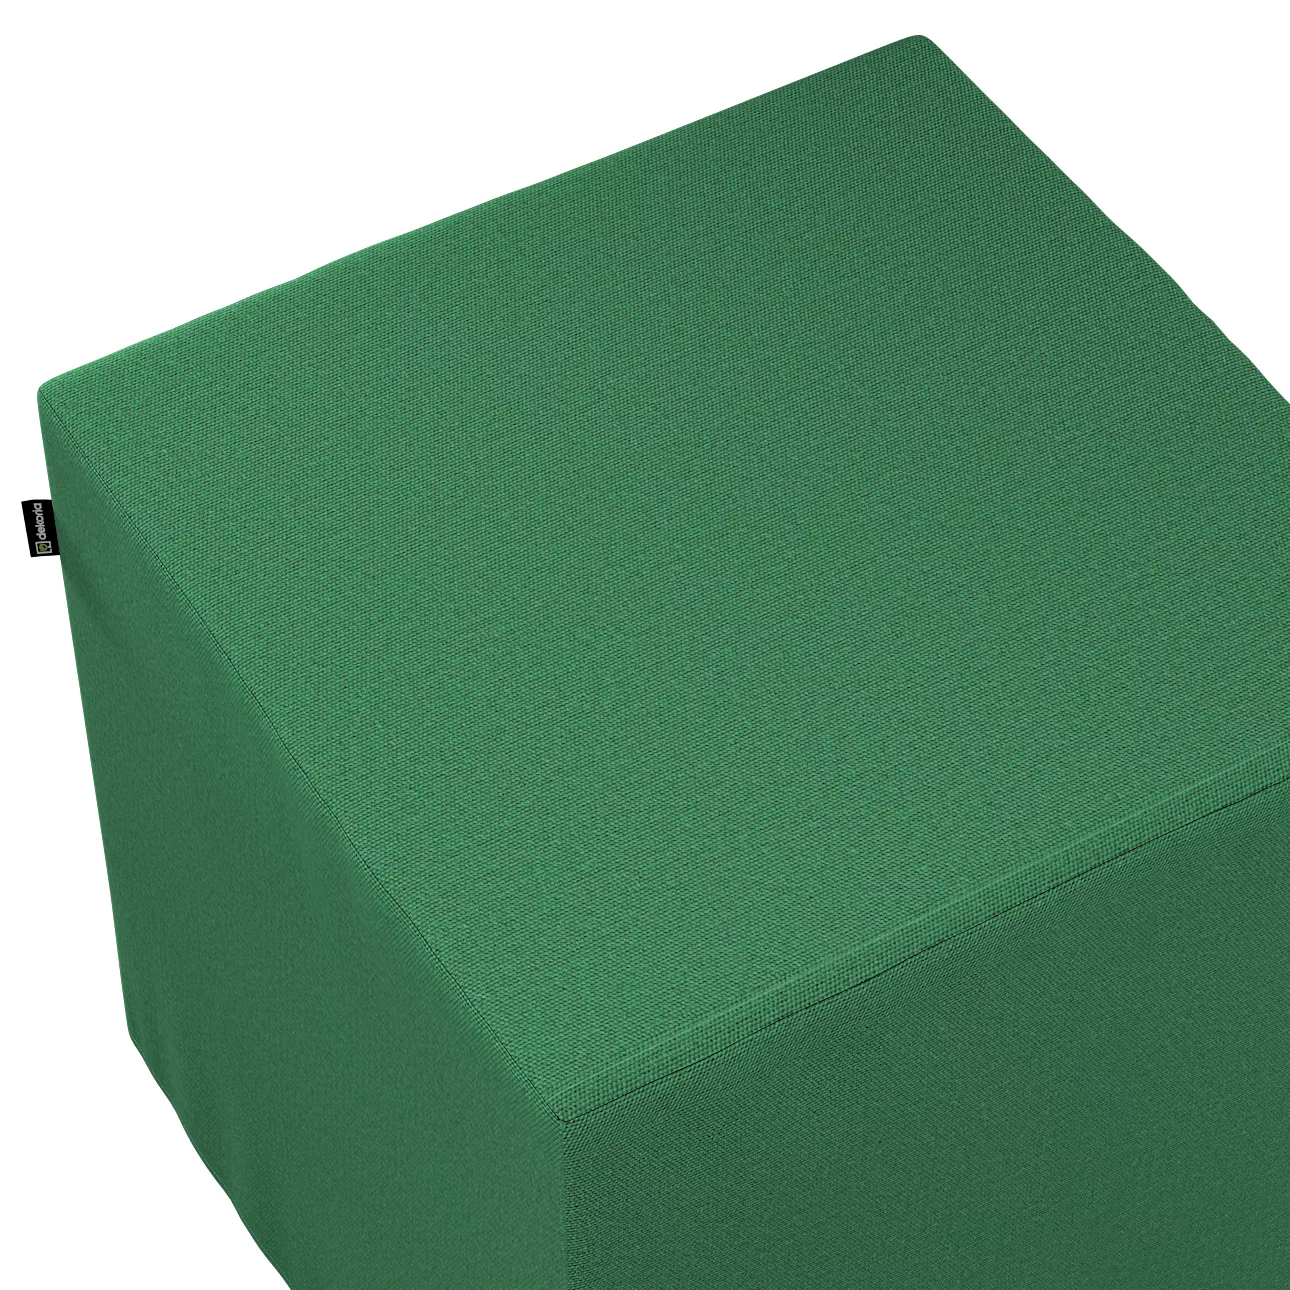 Bezug für Sitzwürfel, grün, Bezug für Sitzwürfel 40 x 40 x 40 cm, Loneta (1 günstig online kaufen